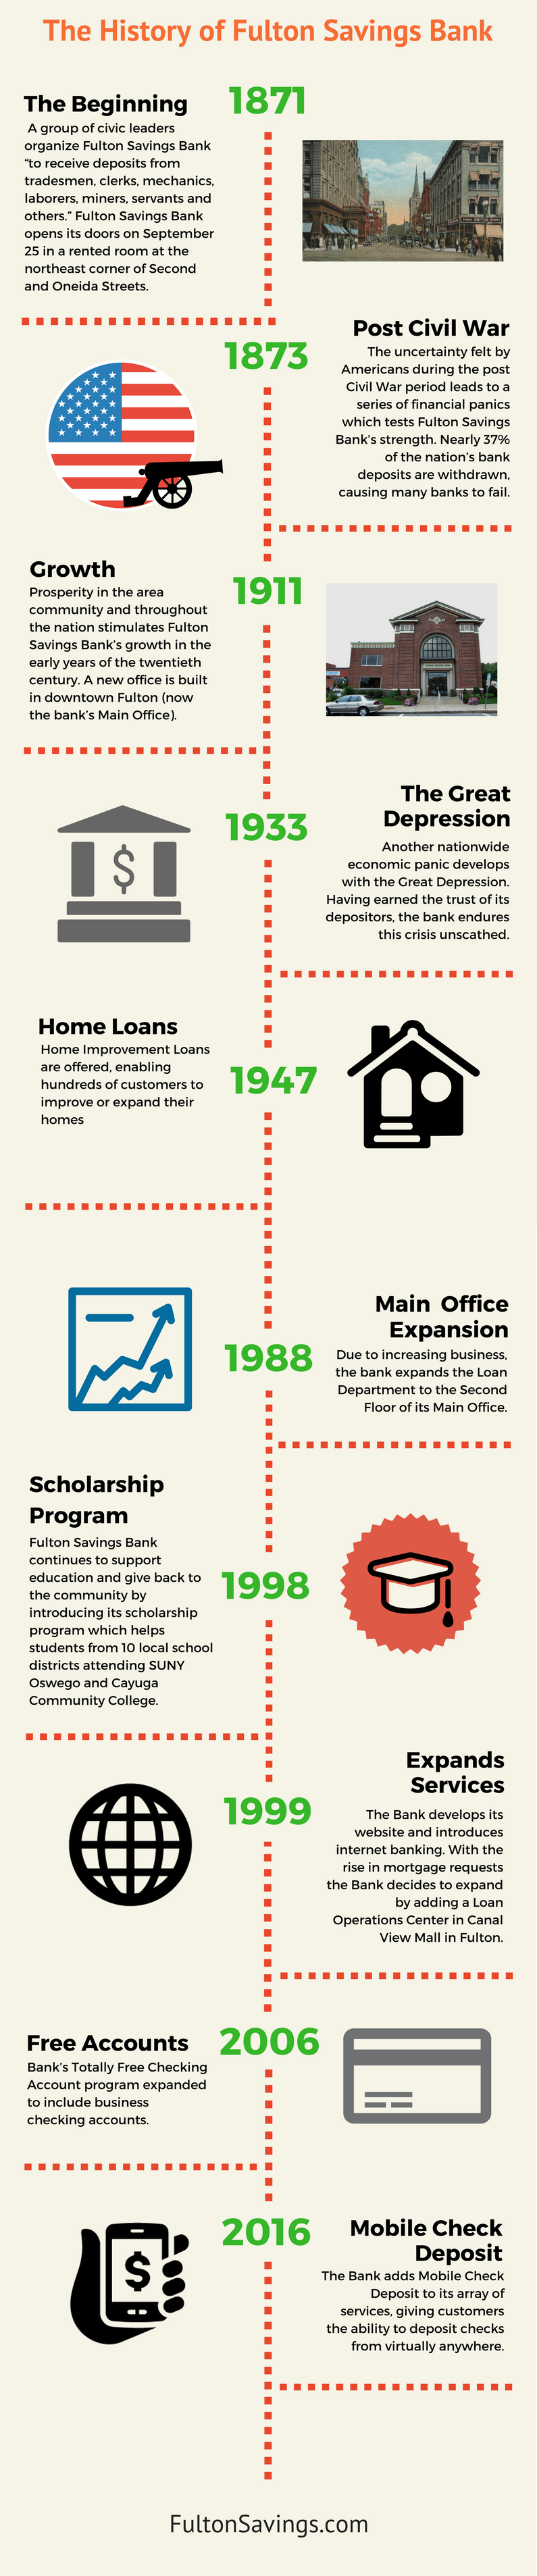 Bank History Timeline from Fulton Savings Bank